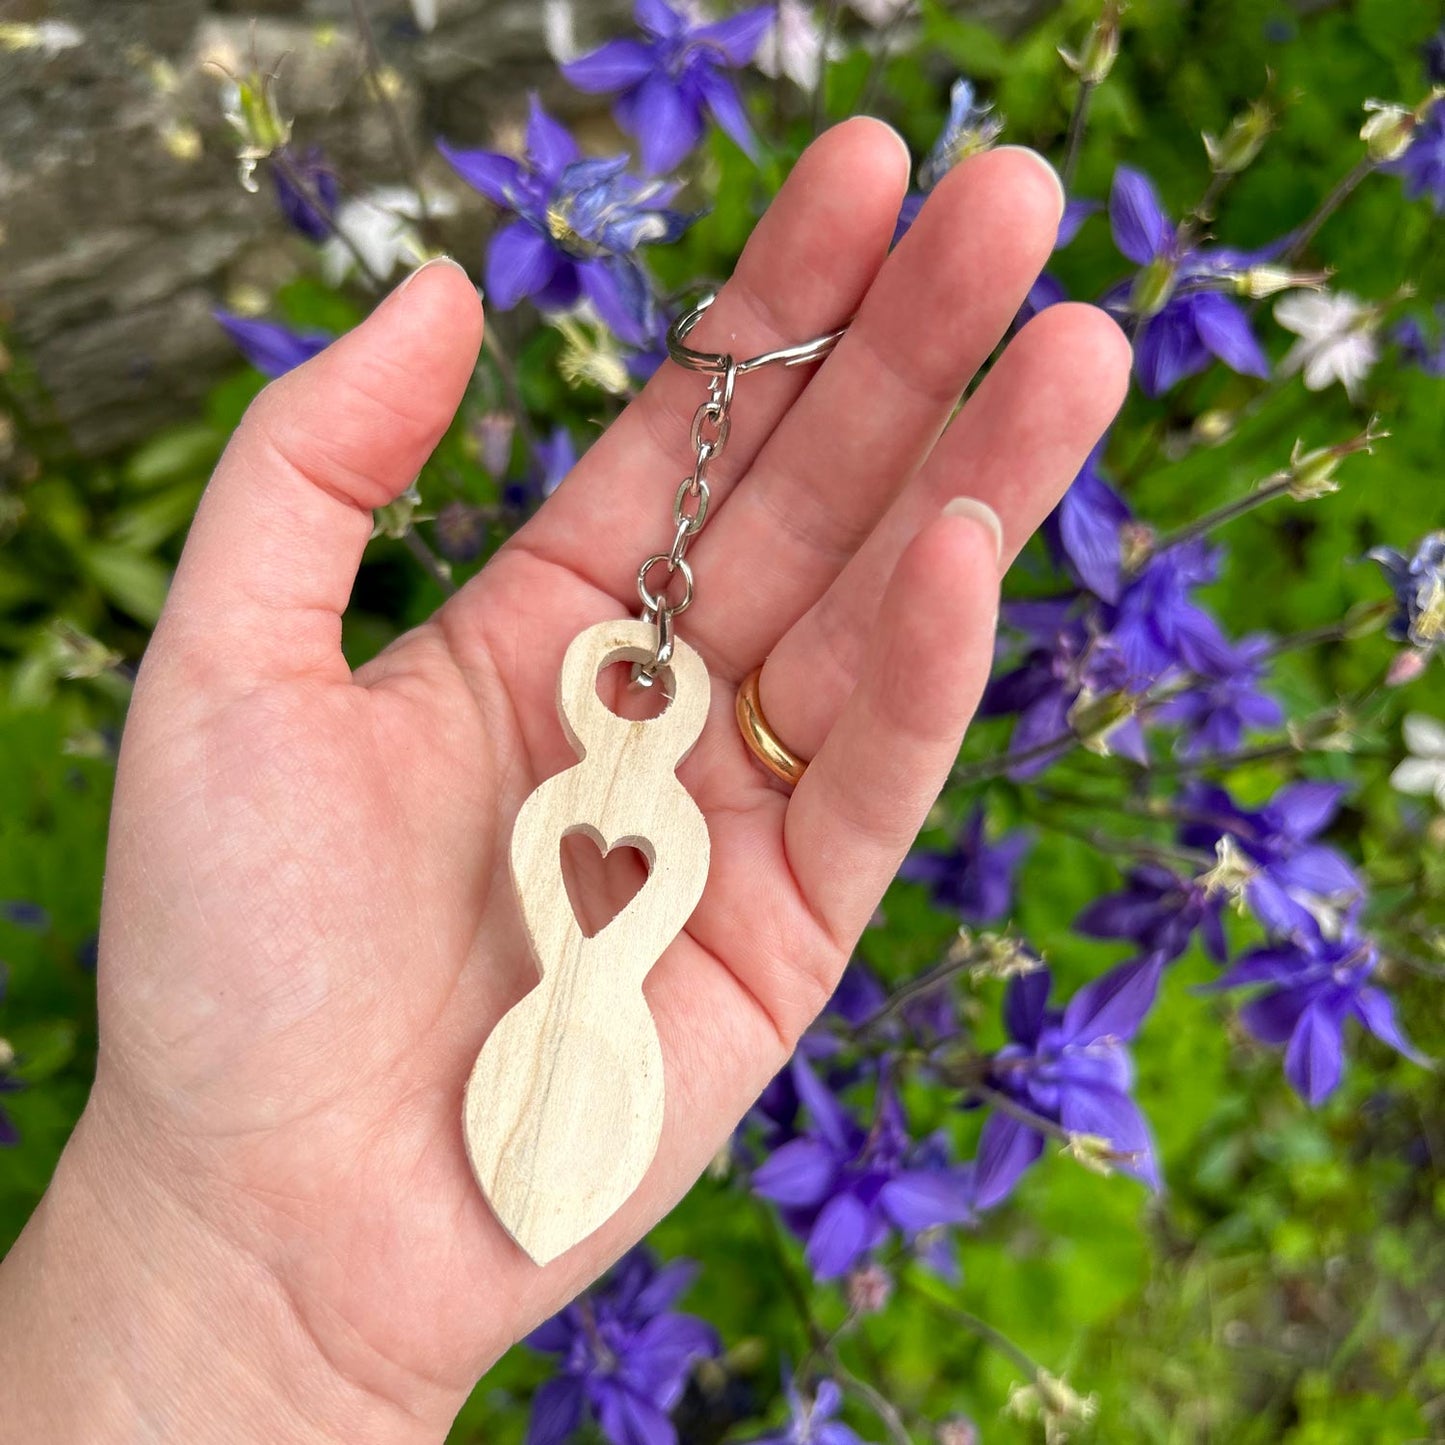 Keyring / Keychain - Handmade Welsh Love Spoon